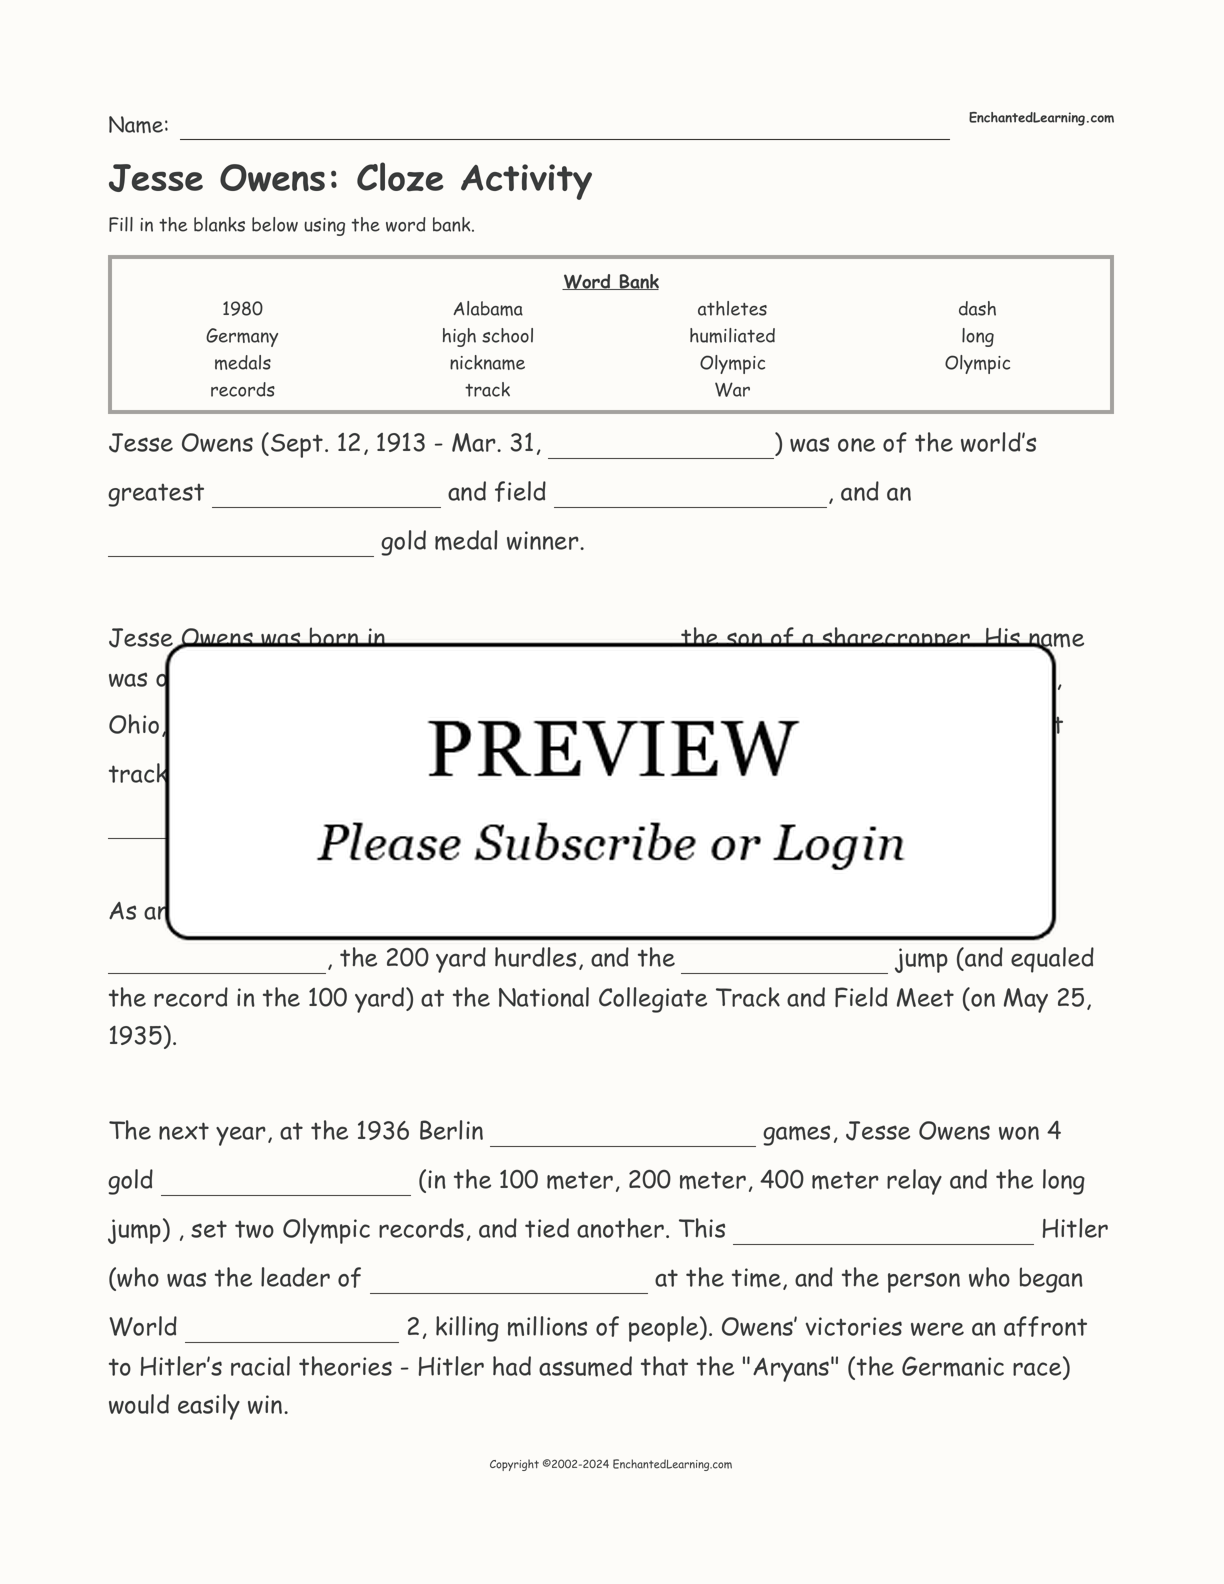 Jesse Owens: Cloze Activity interactive worksheet page 1